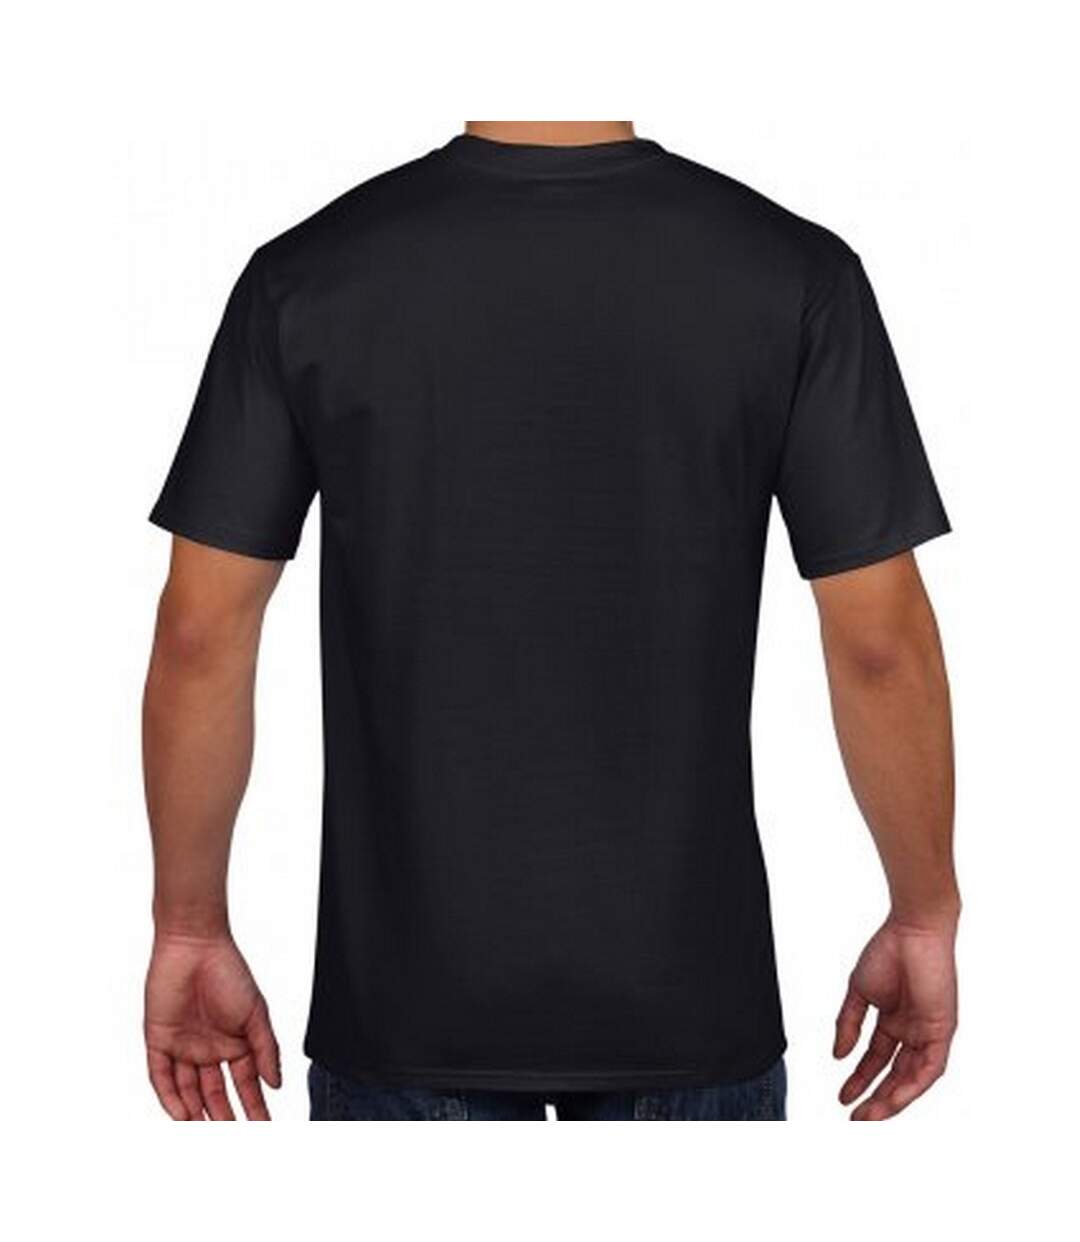 Gildan Mens Premium Cotton T-Shirt (Black)